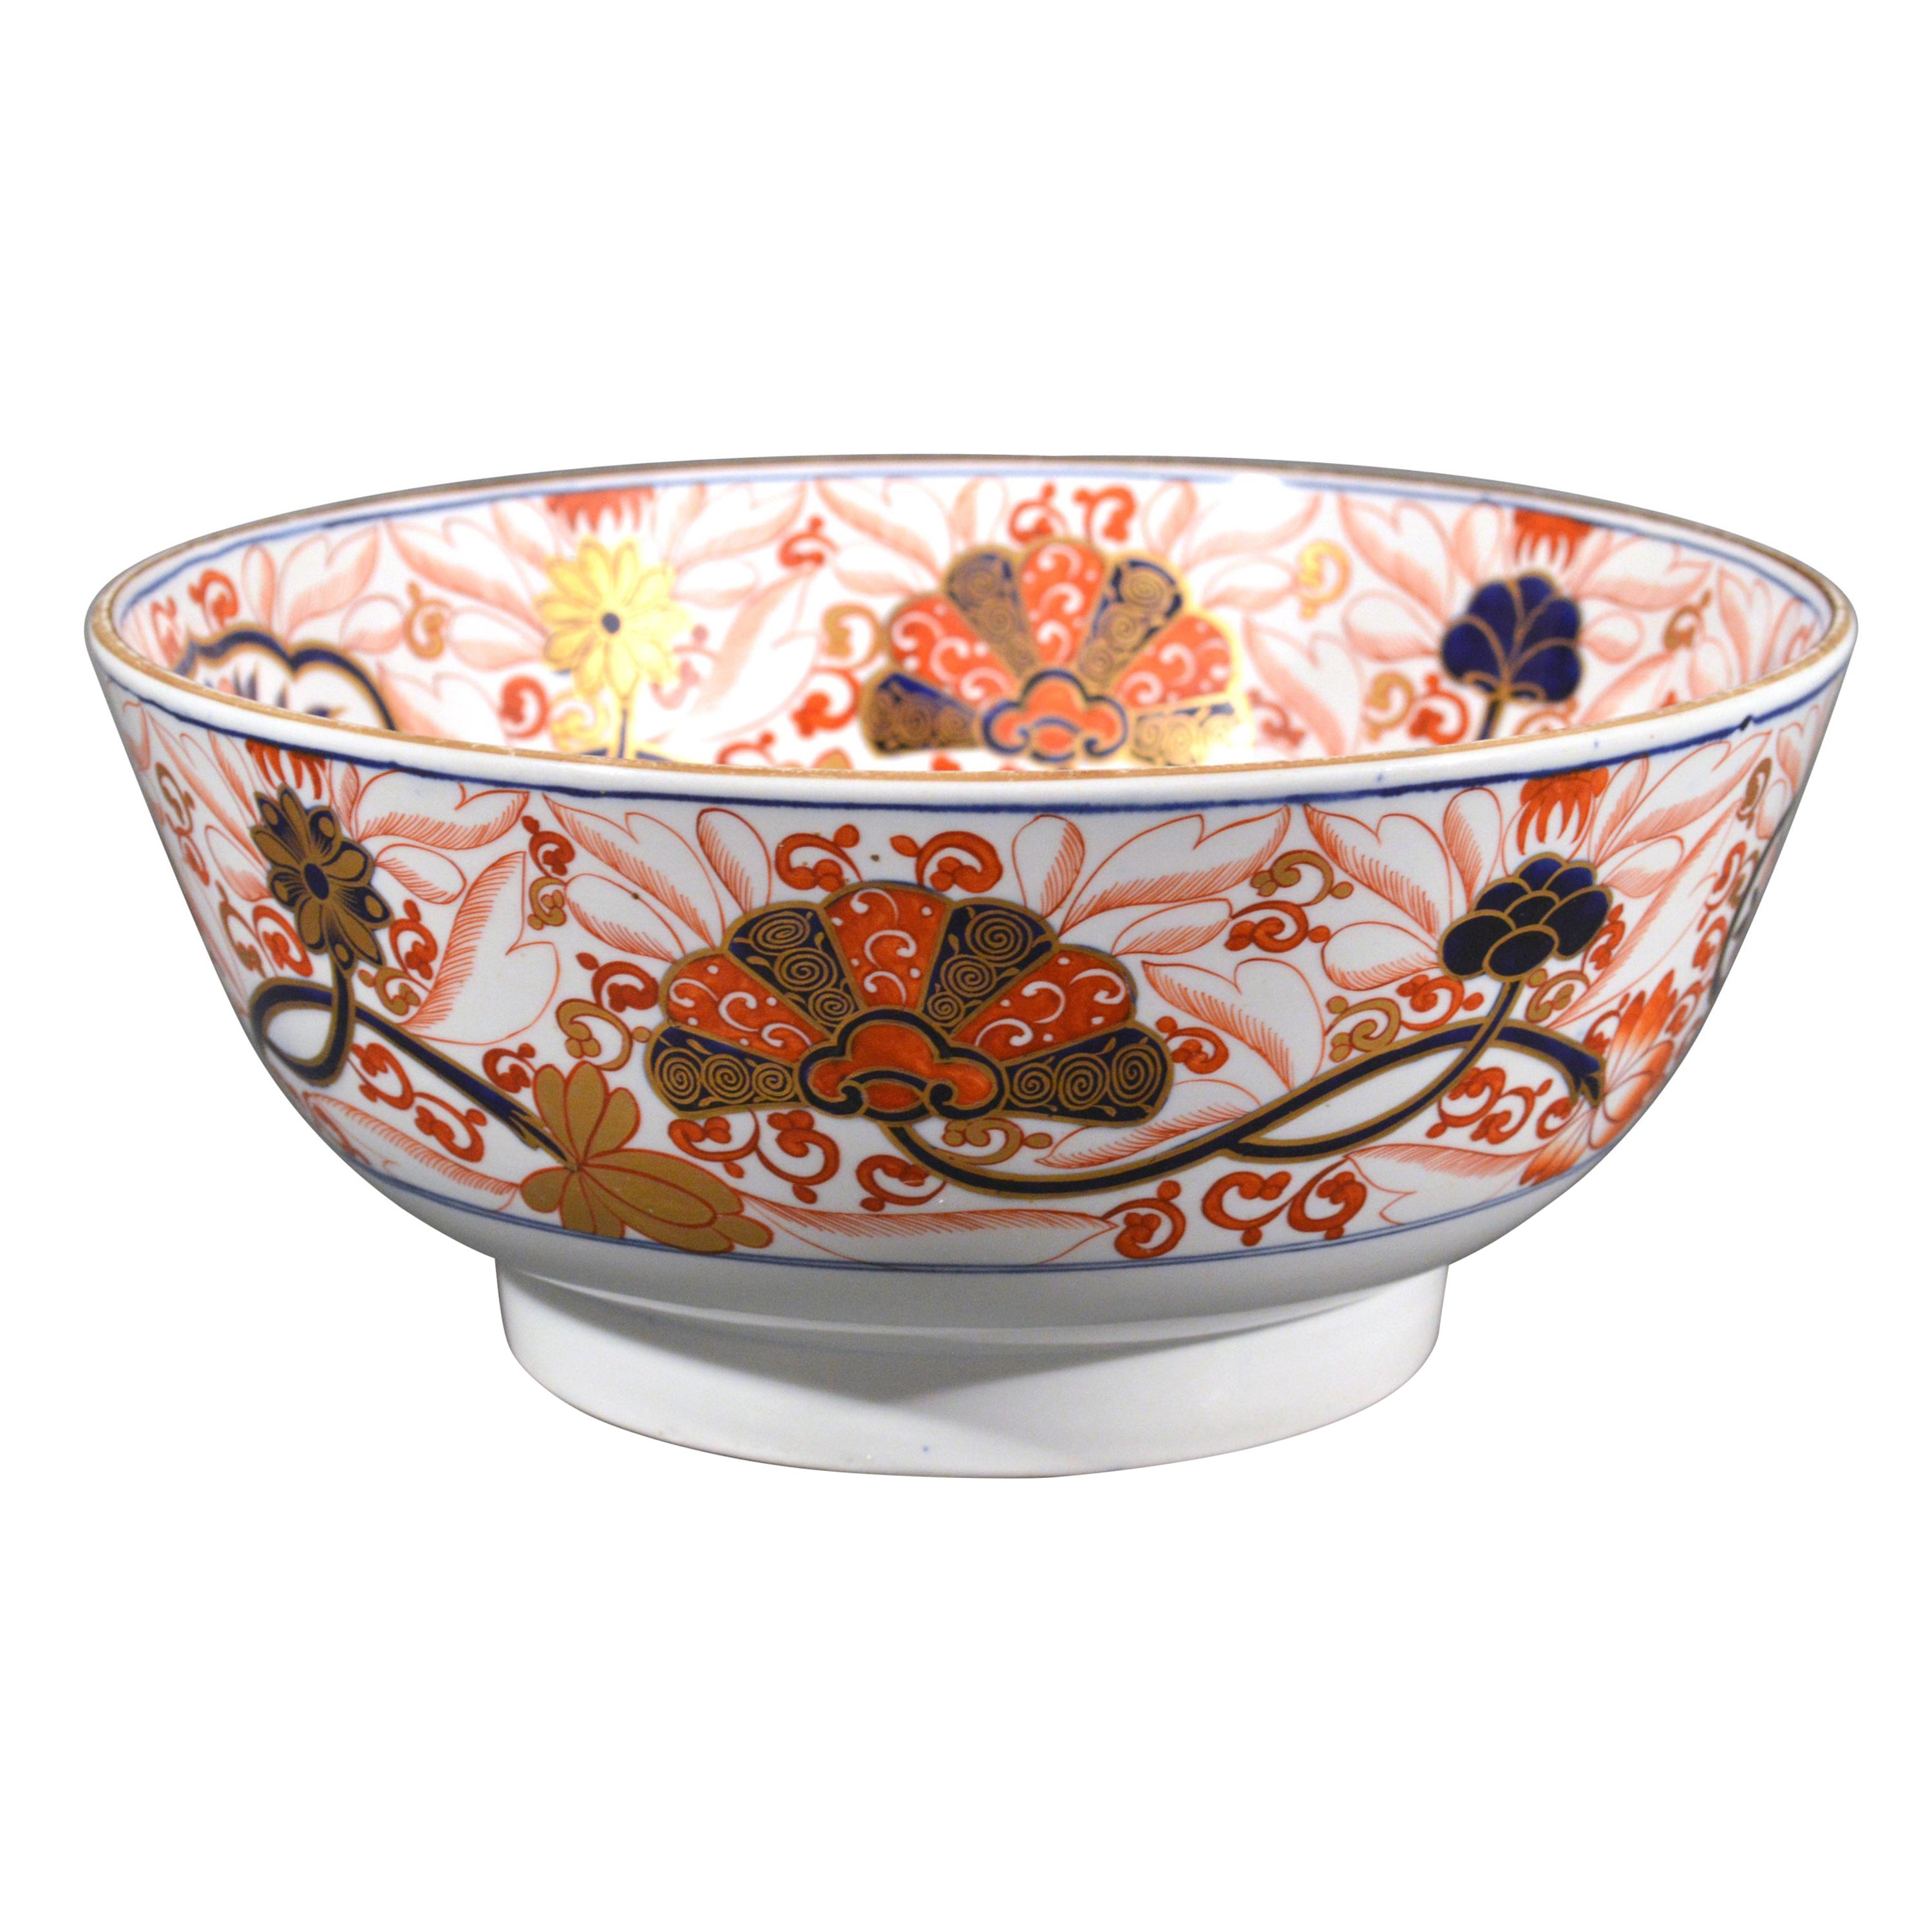 Regency Spode Imari Punch Bowl, Pattern # 2283